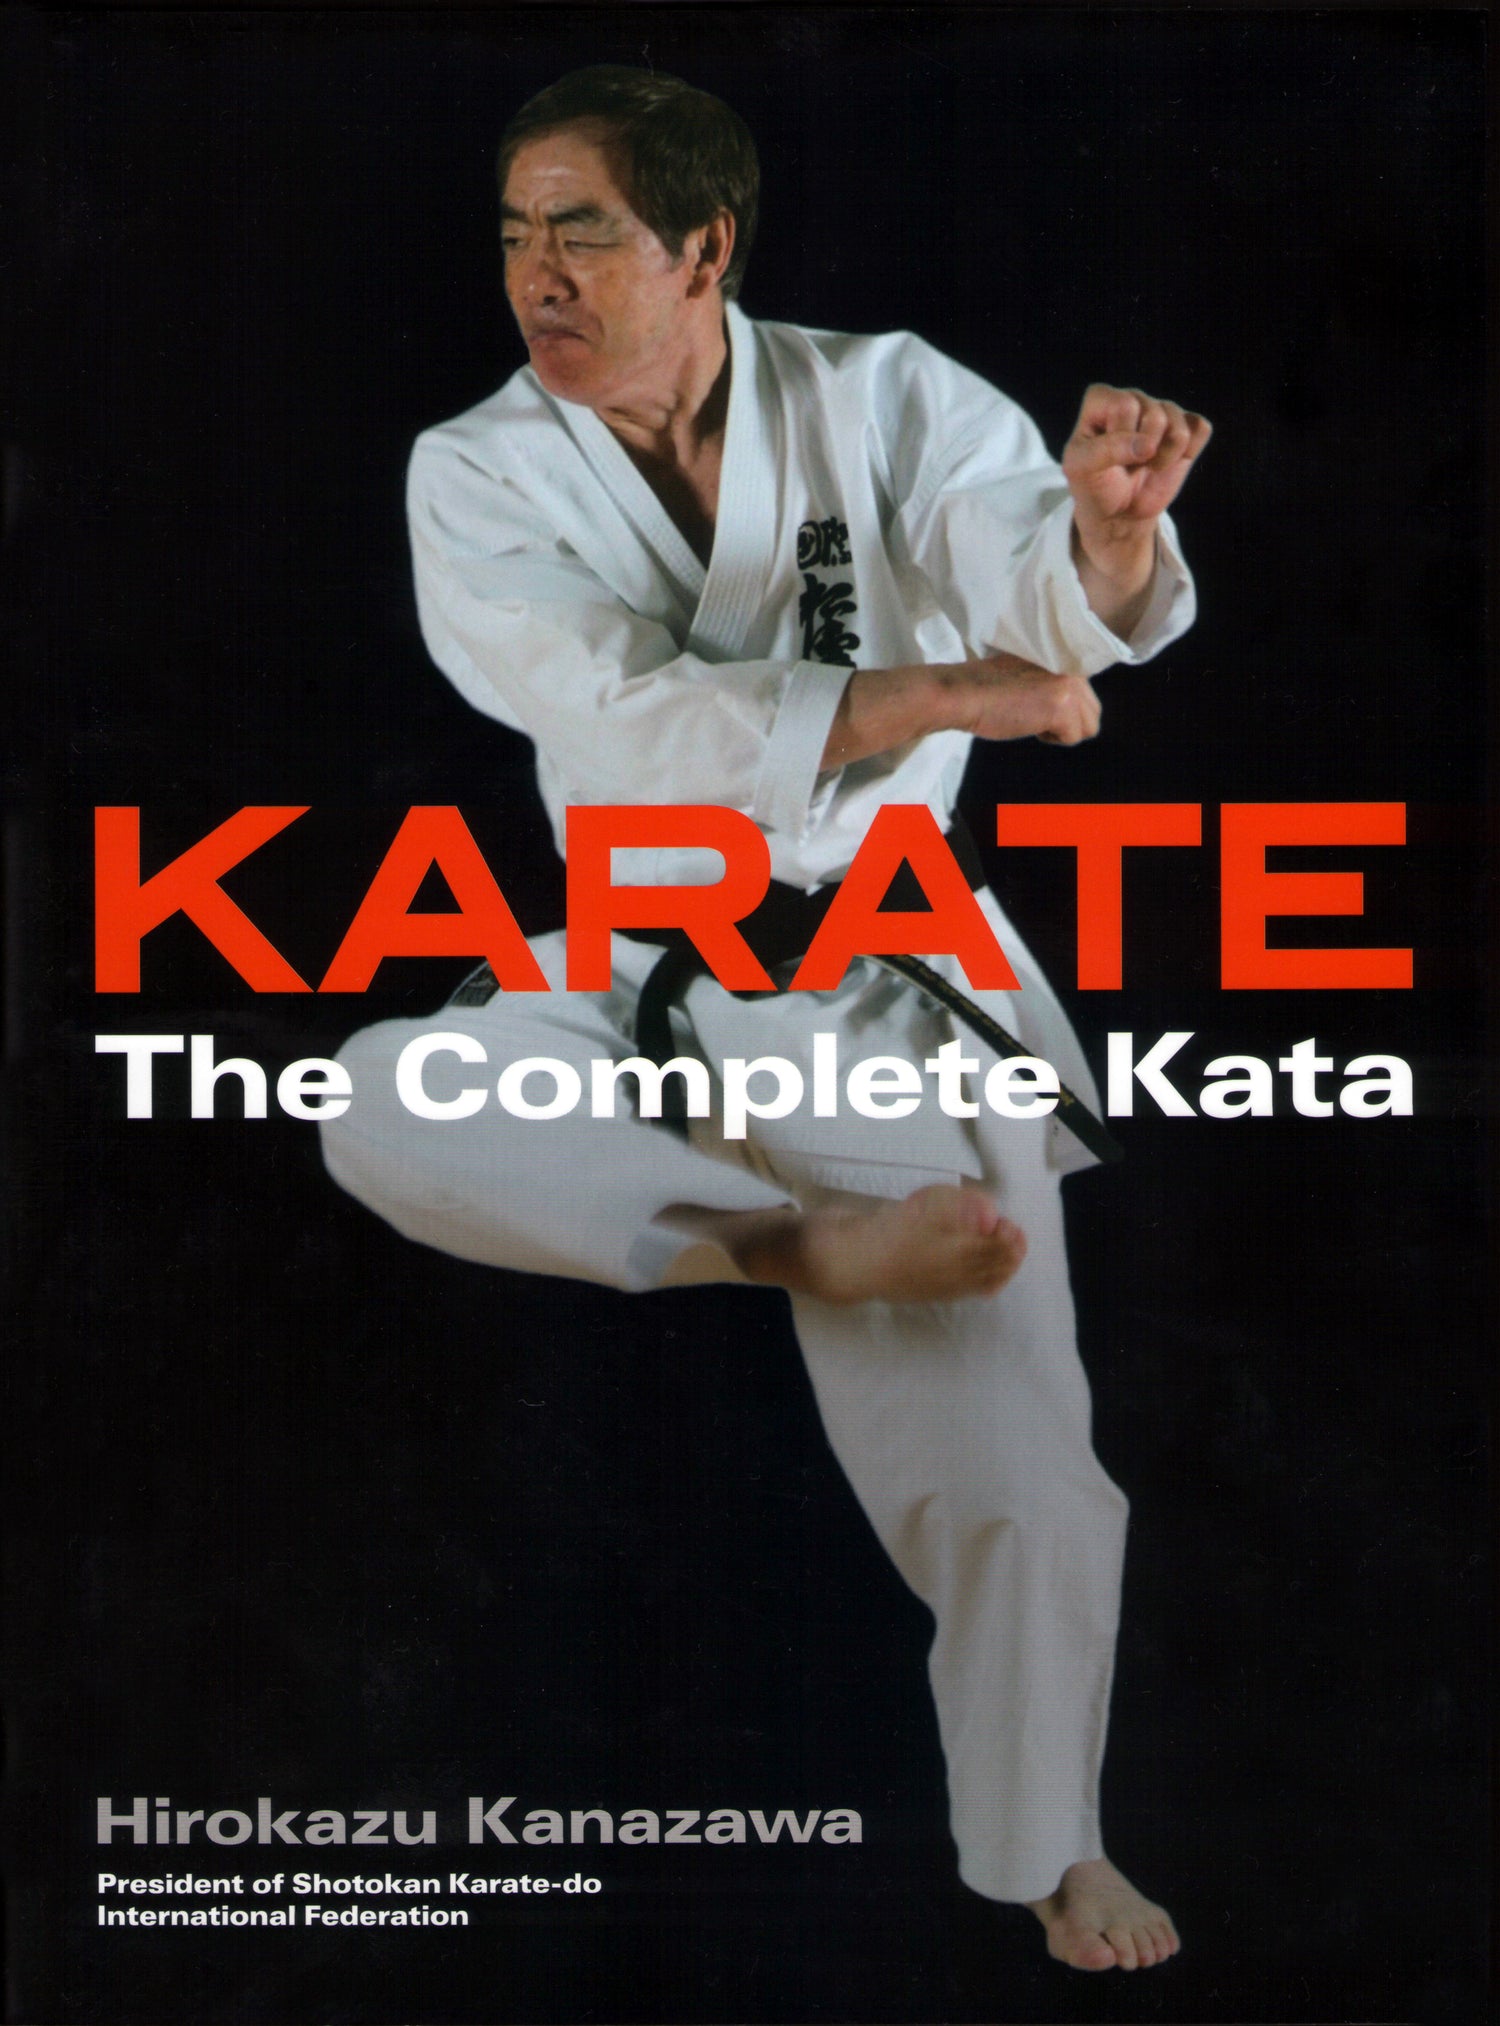 Karate: The Complete Kata (Hardcover) Book by Hirokazu Kanazawa - Budovideos